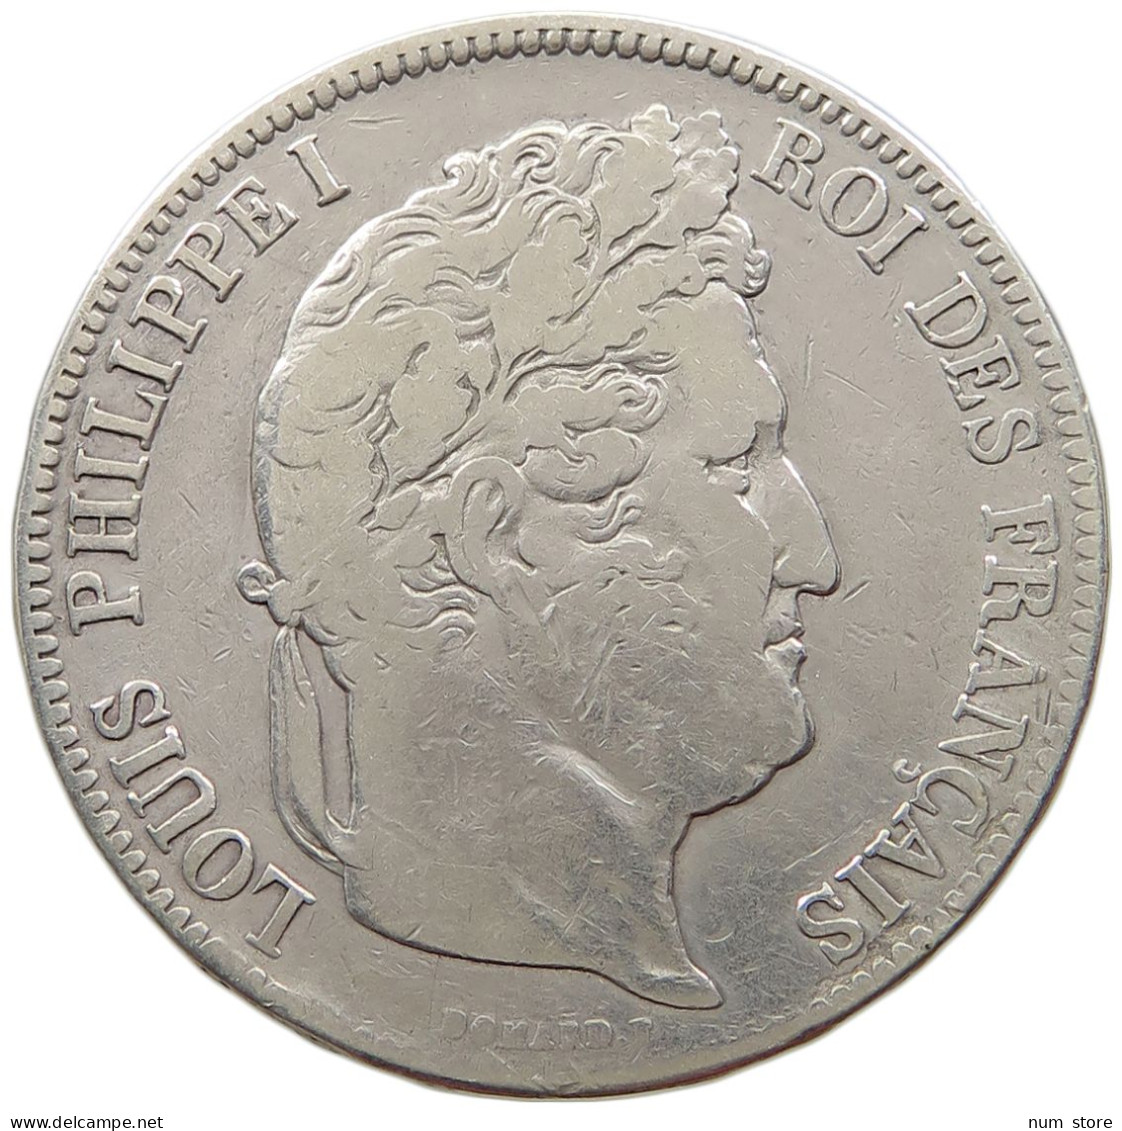 FRANCE 5 FRANCS 1834 A LOUIS PHILIPPE I. (1830-1848) #a001 0125 - 5 Francs